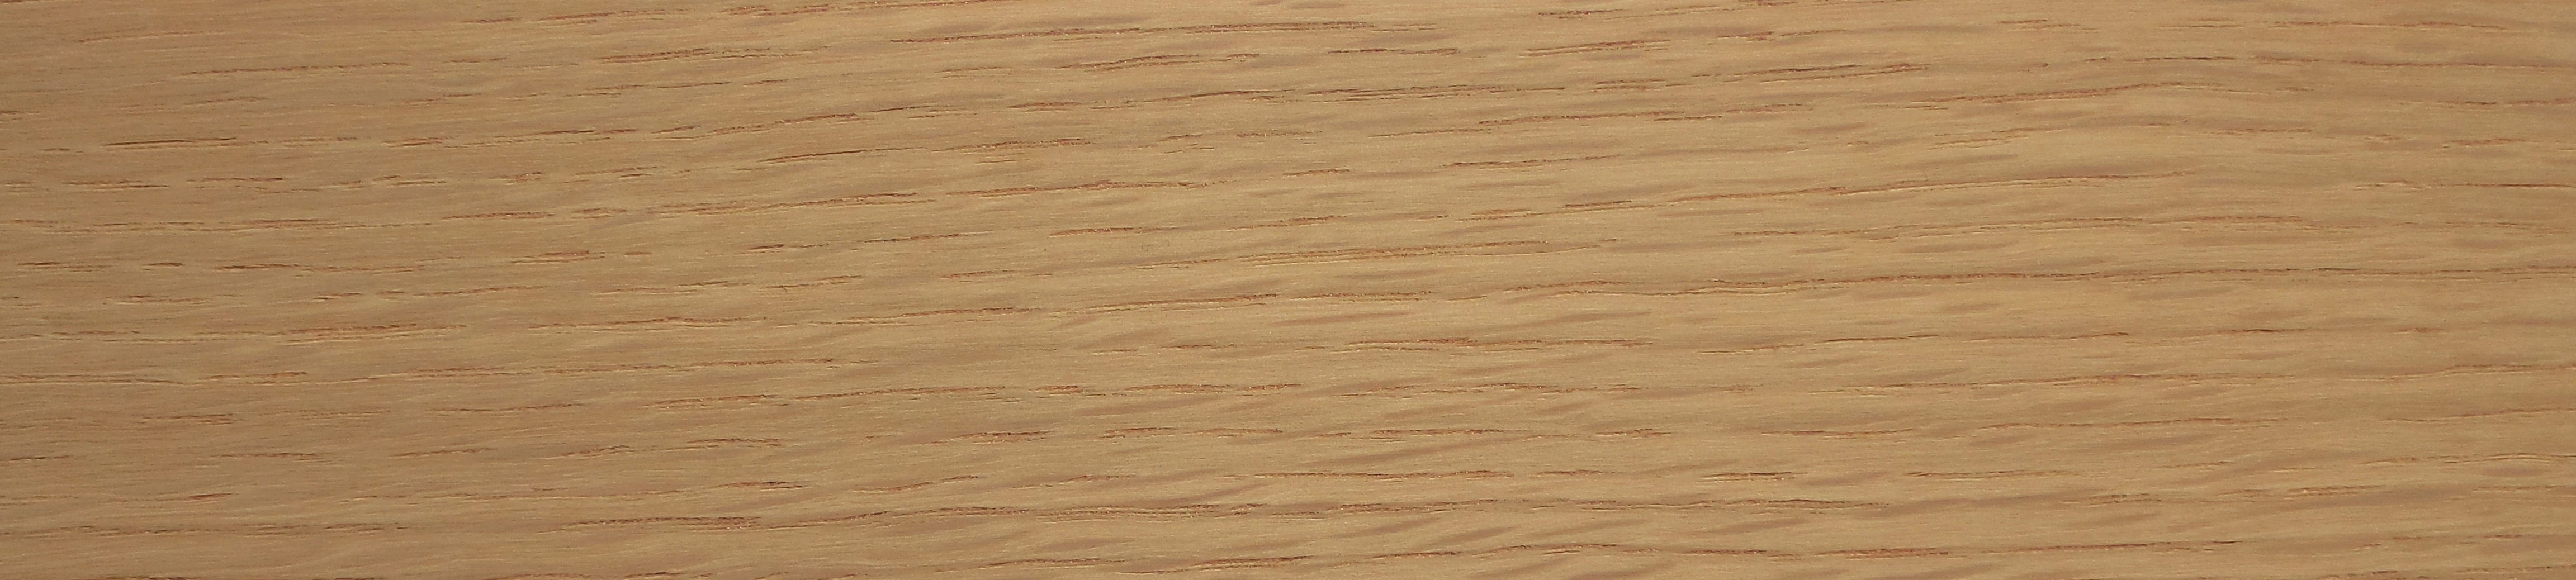 Oak UNGLUED Edging 50mm x 0.5mm - 50 or 100 metre rolls